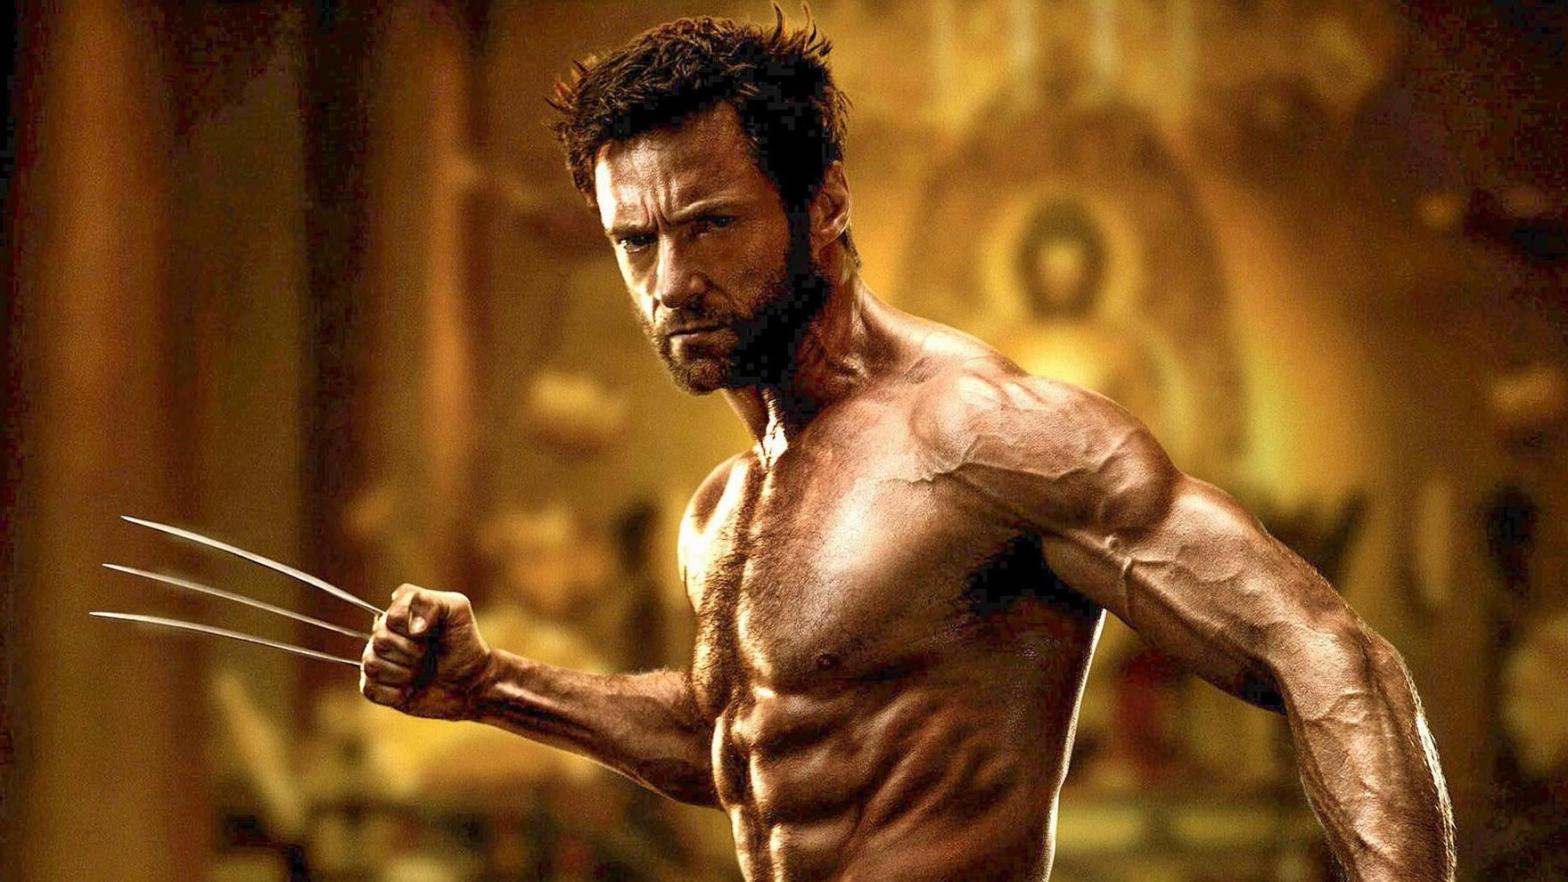 Image: The Wolverine/20th Century